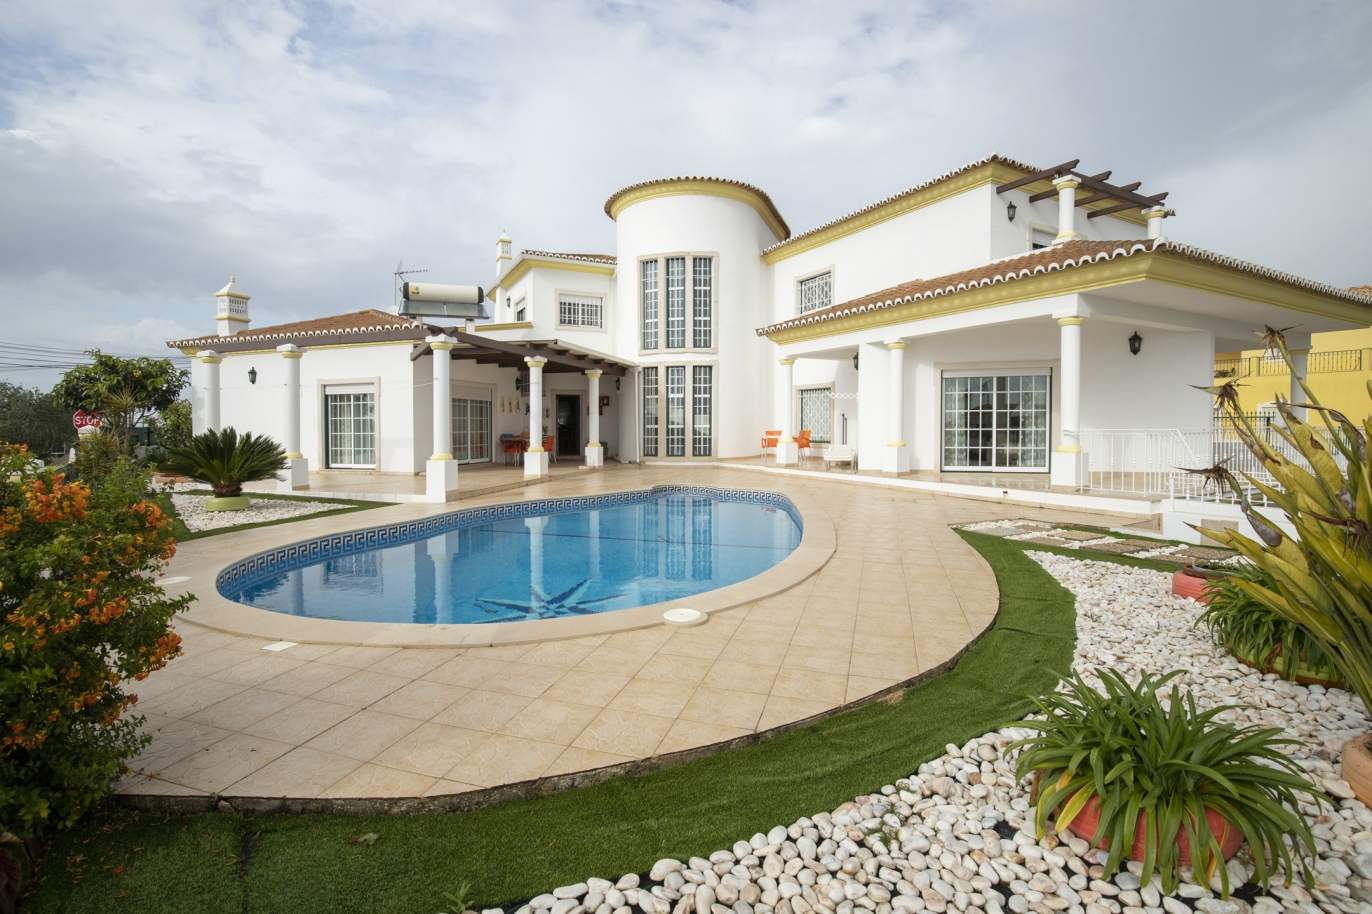 4 Bedroom Villa with swimming pool, for sale, in Albufeira, Algarve_196126